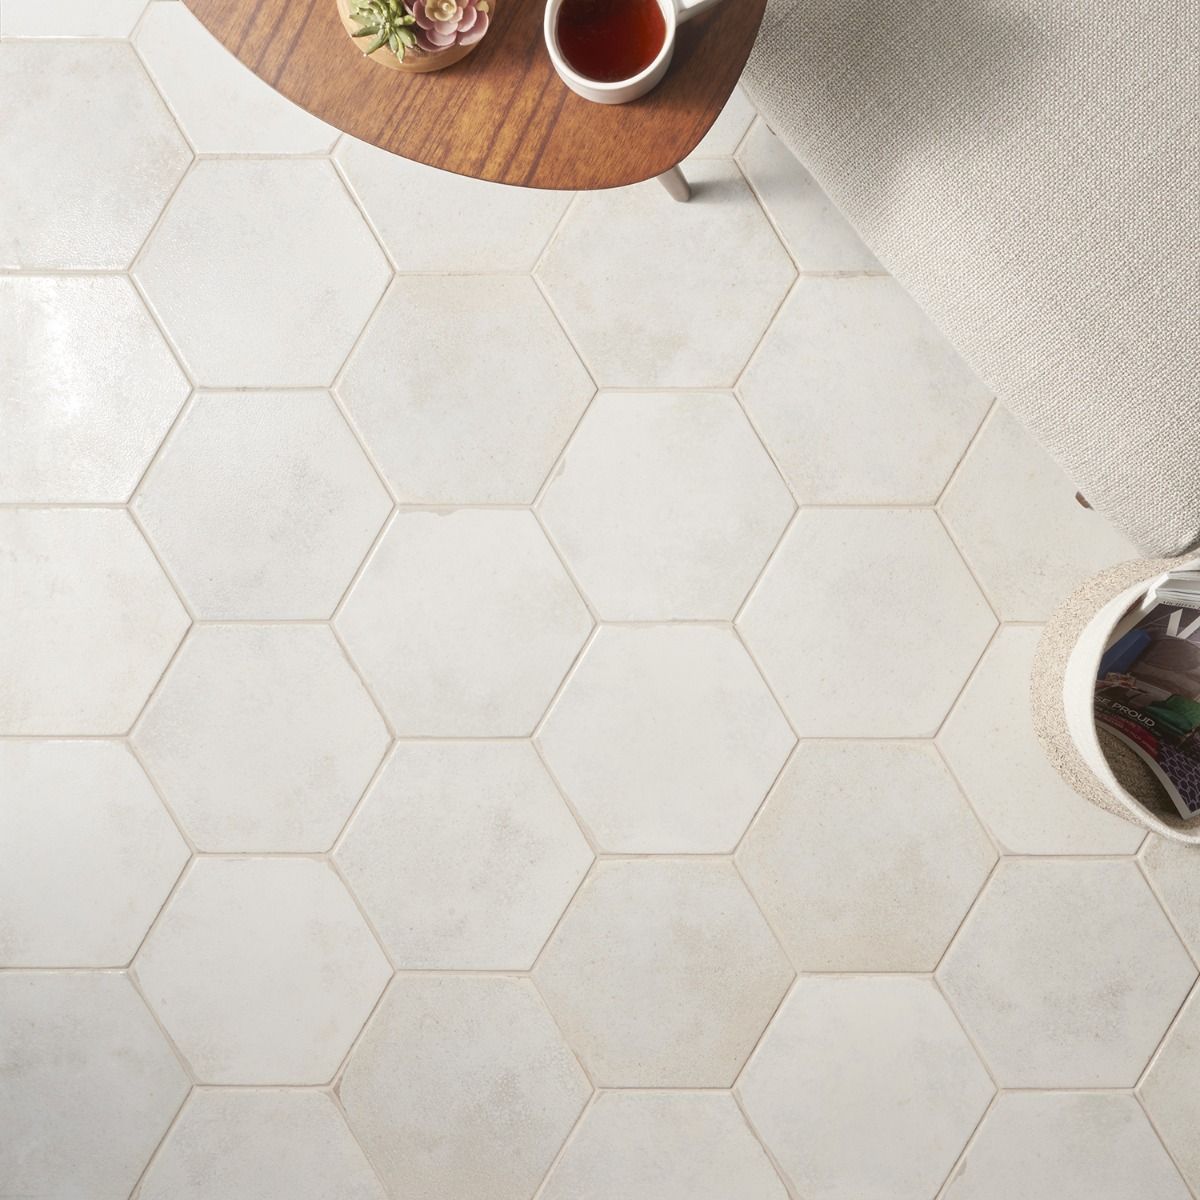 Installing your own bathroom floor tile